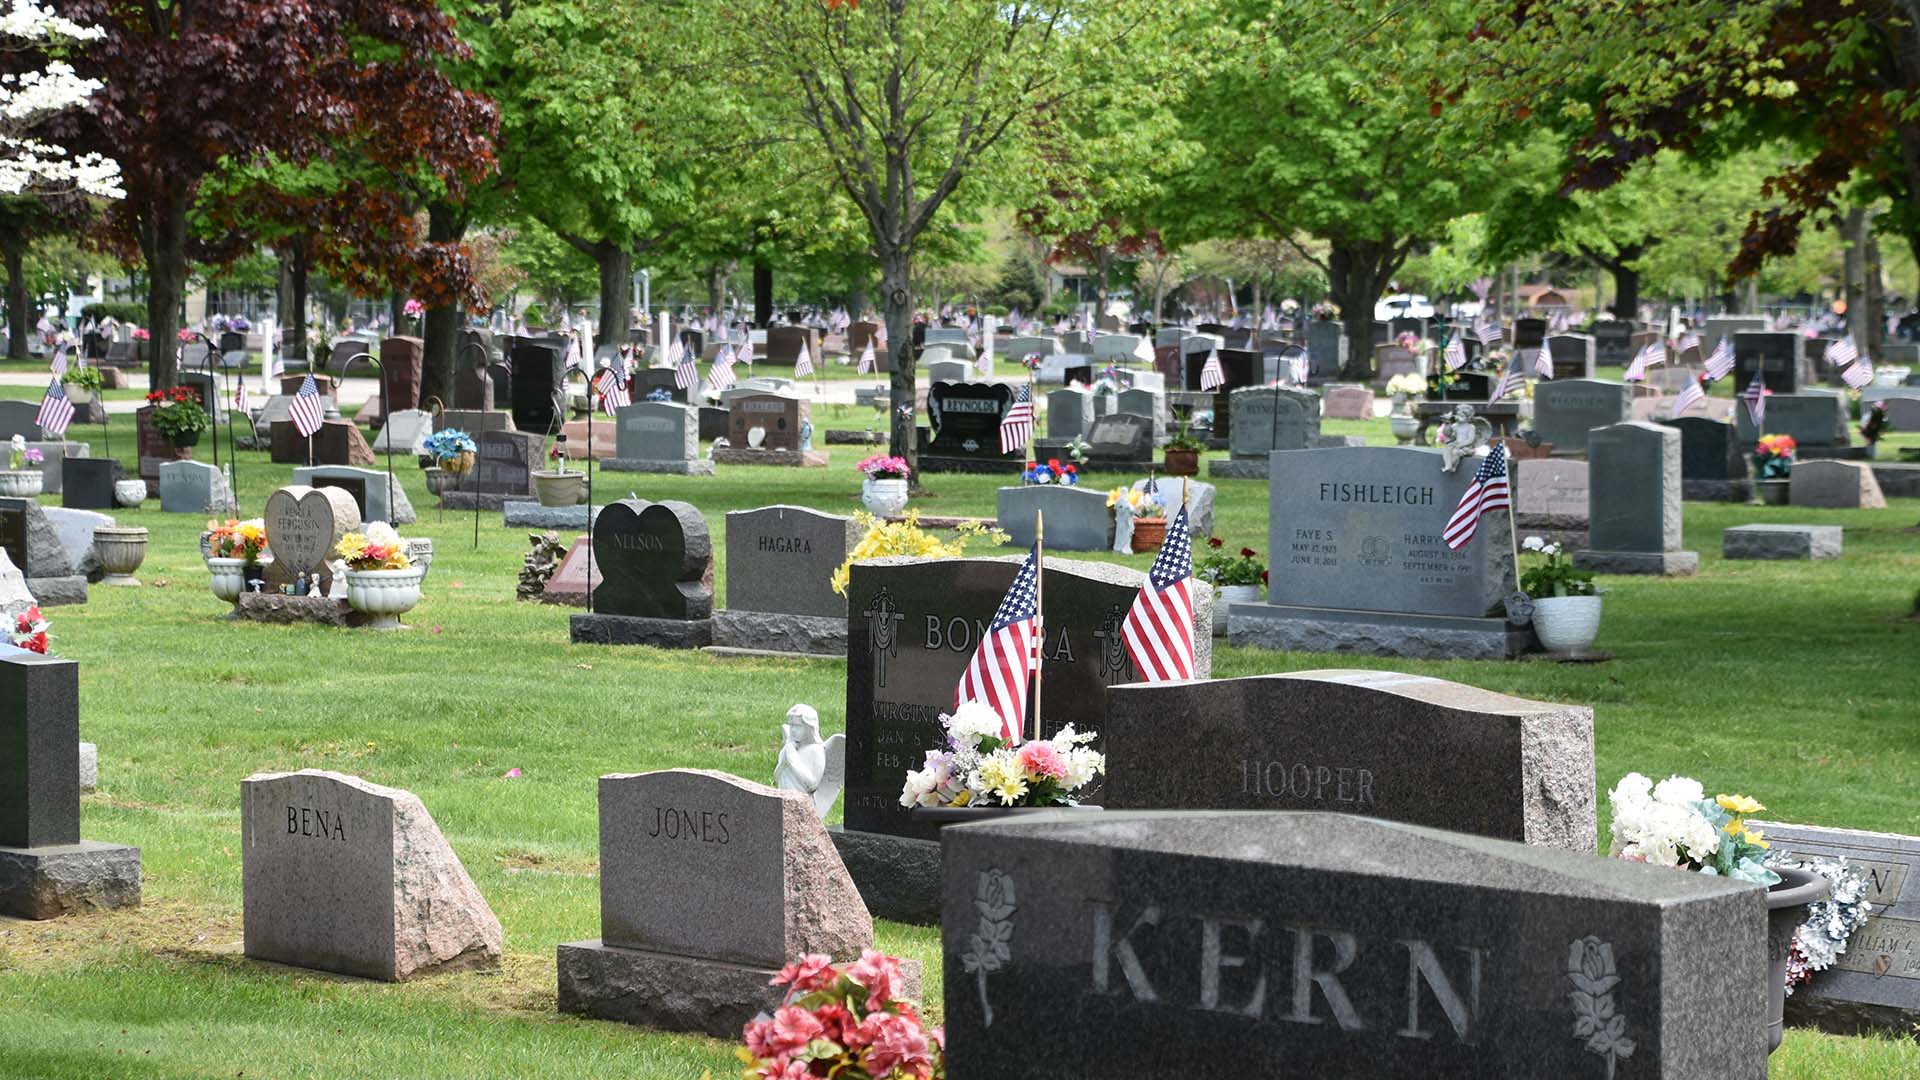 Mentor Cemetery